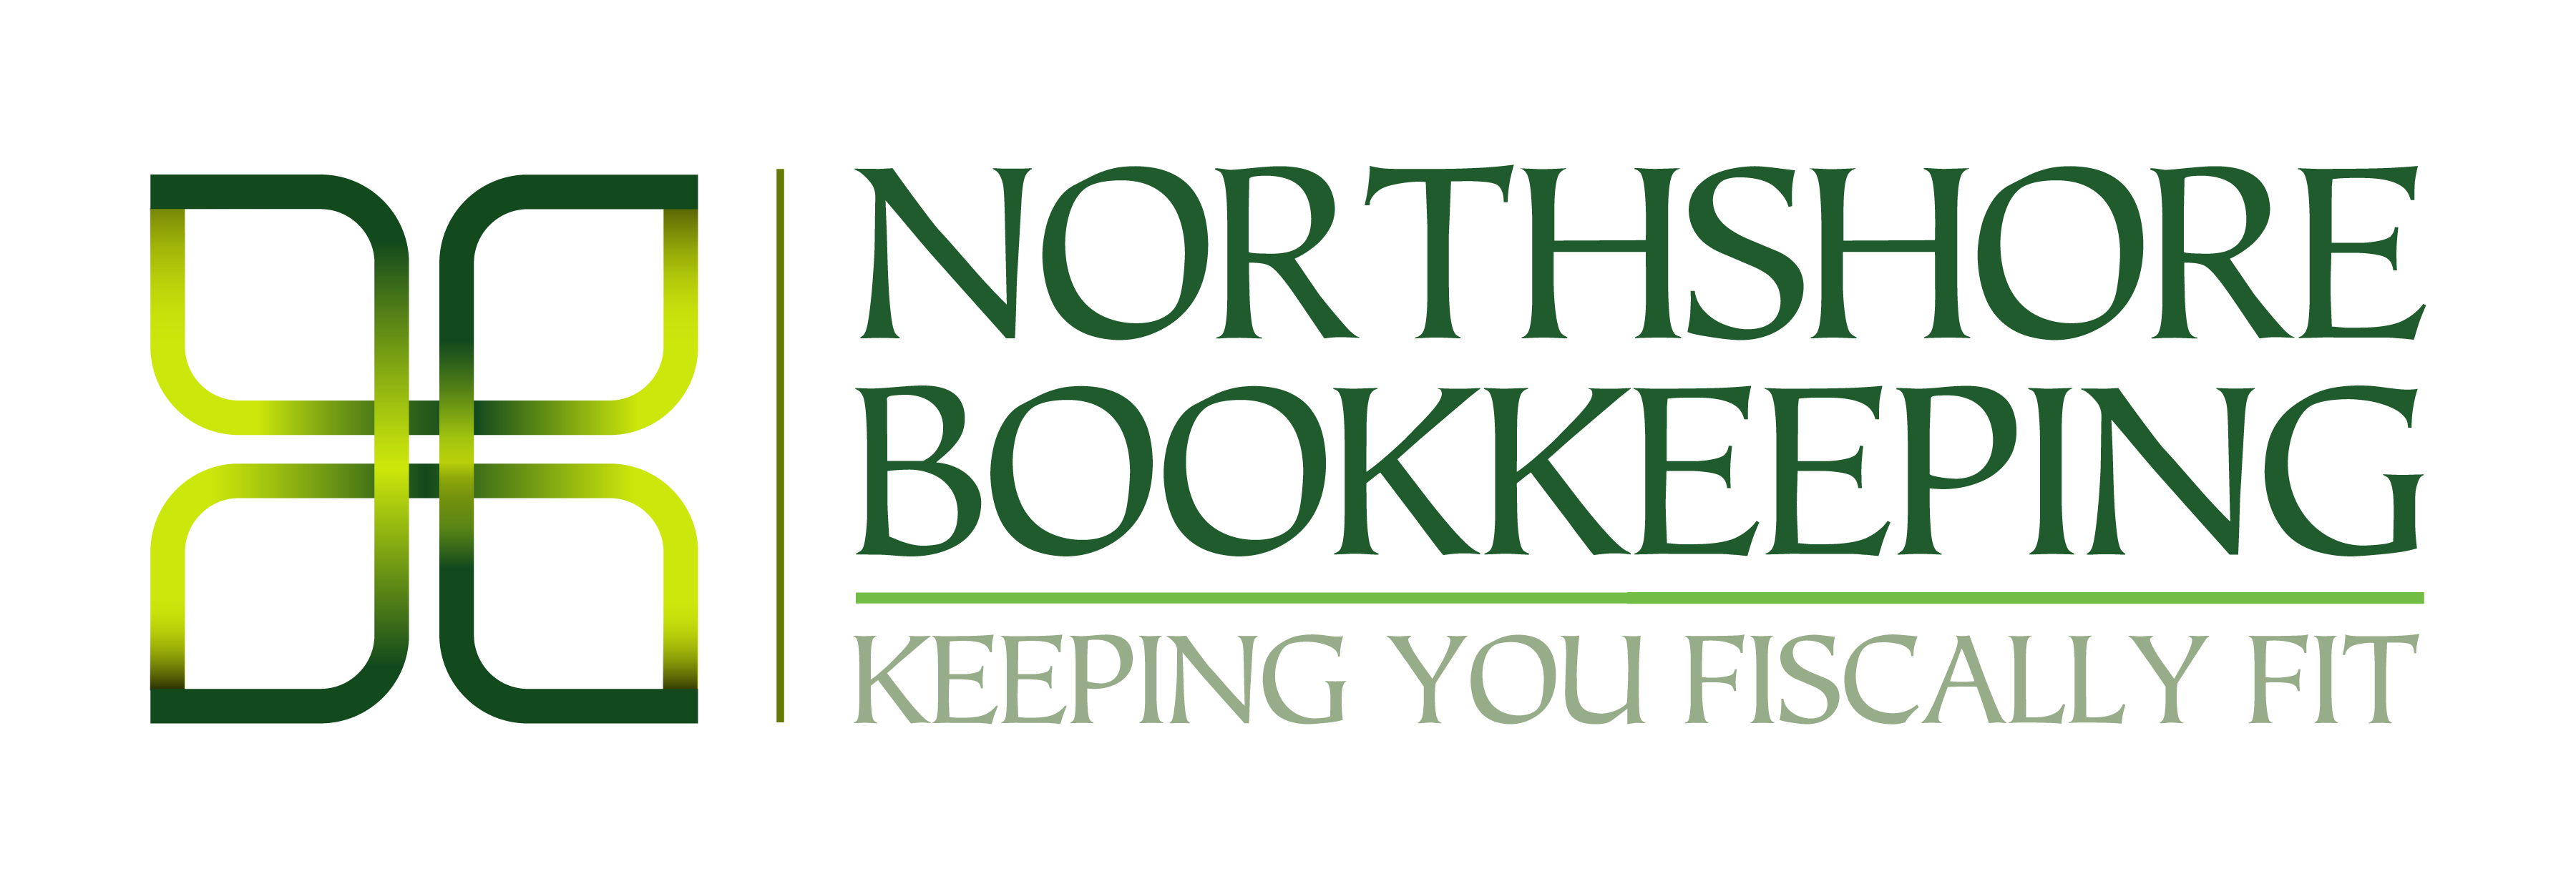 Northshore Bookkeeping